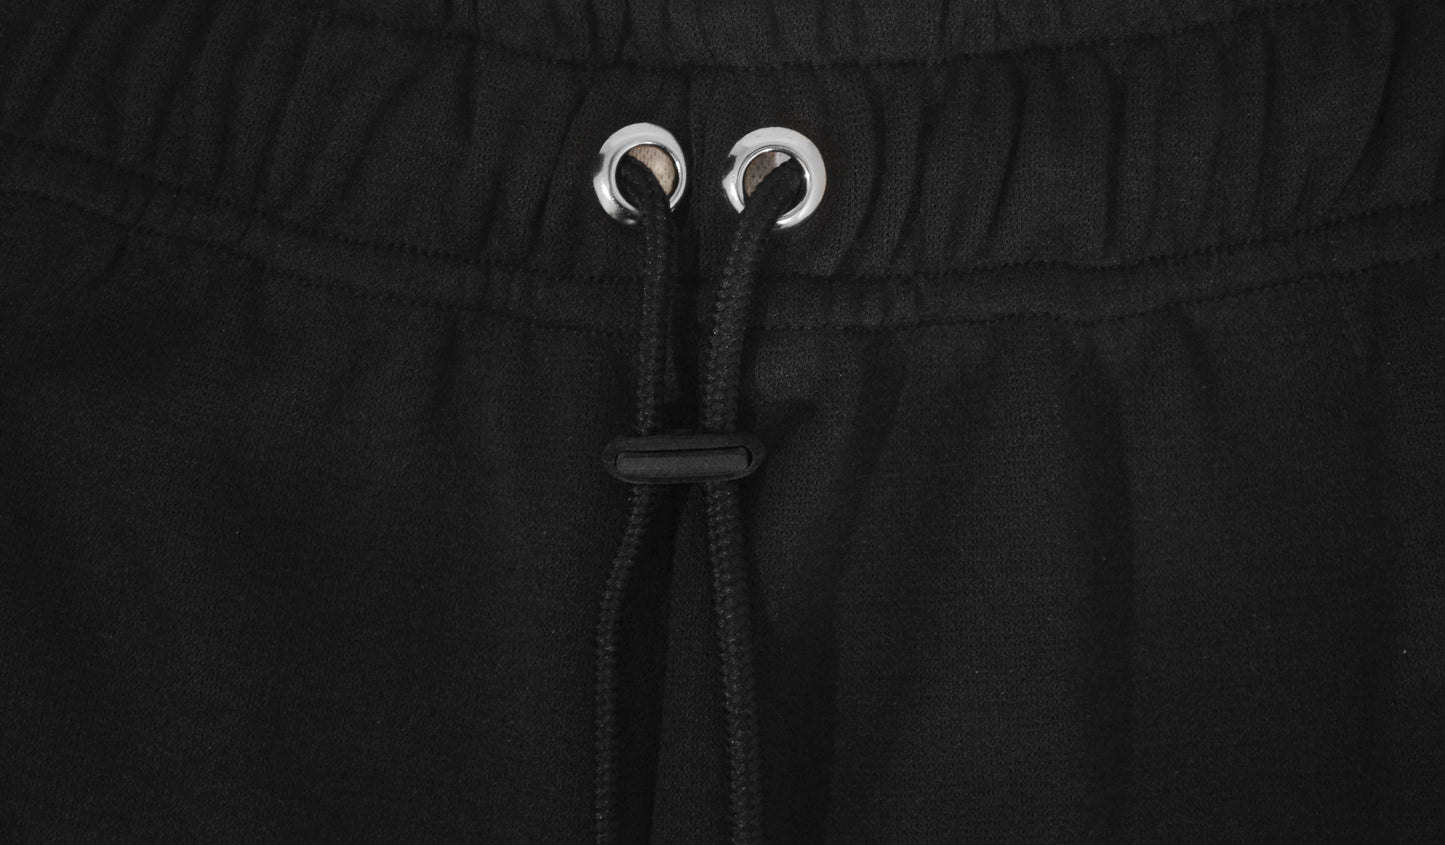 Pantaloneta Perchada Negra Nea minúscula